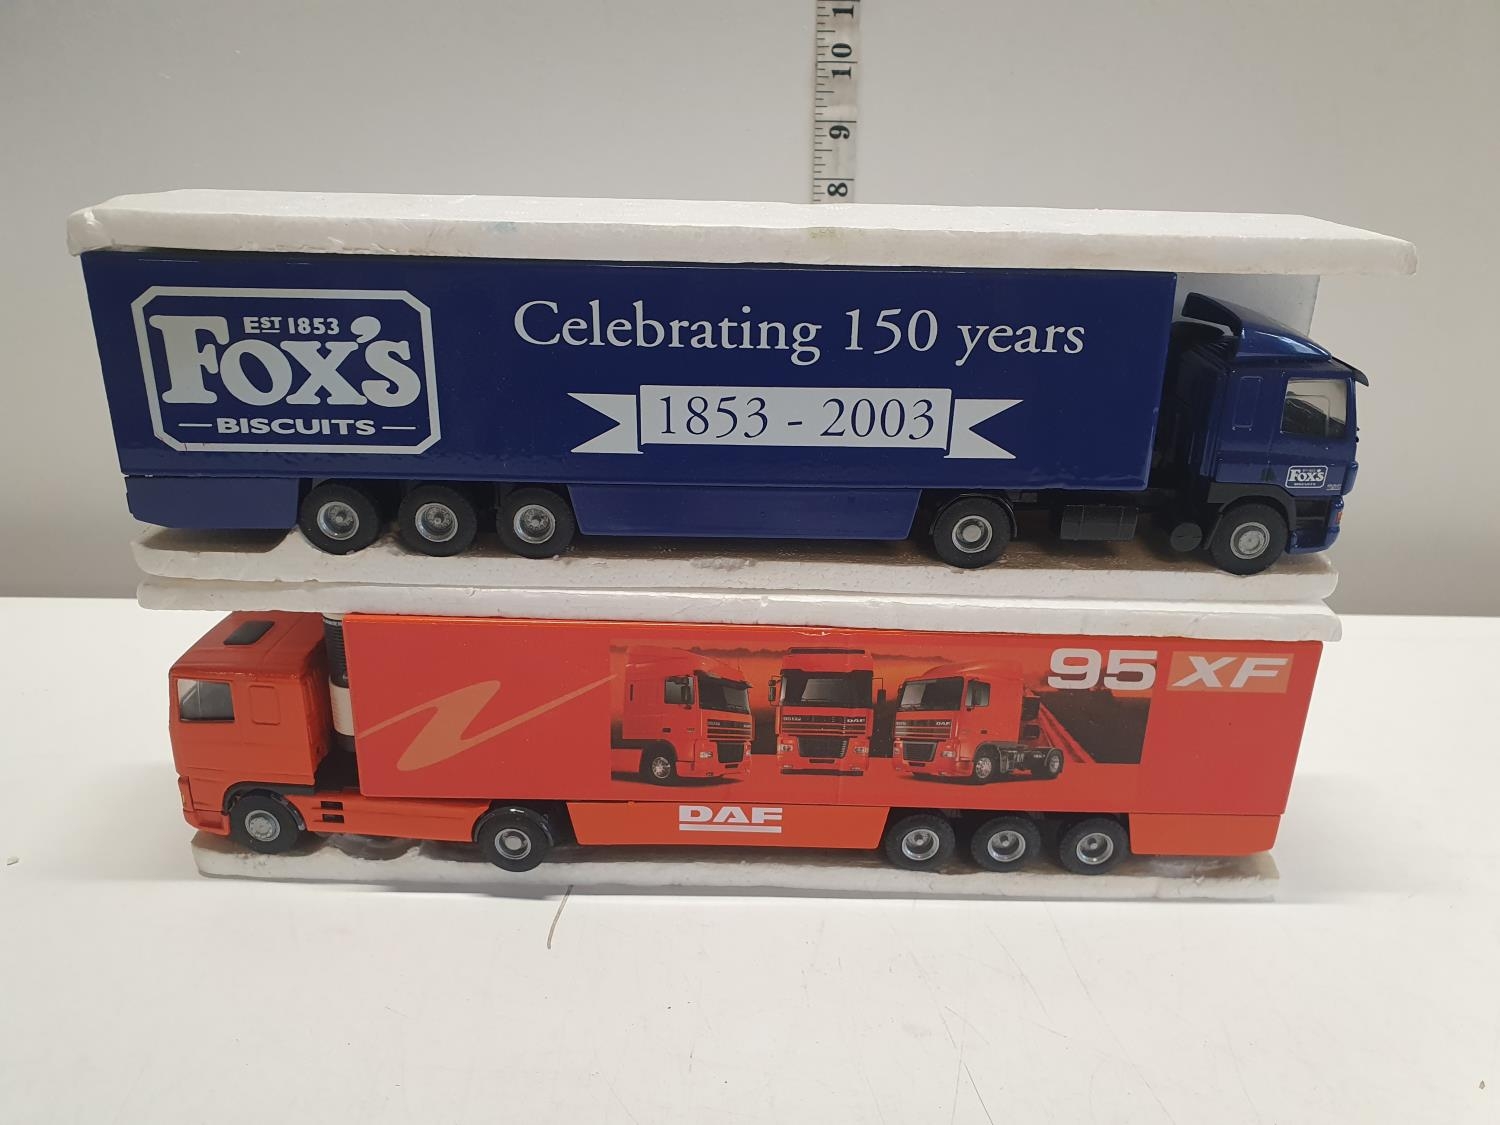 Two die cast truck models